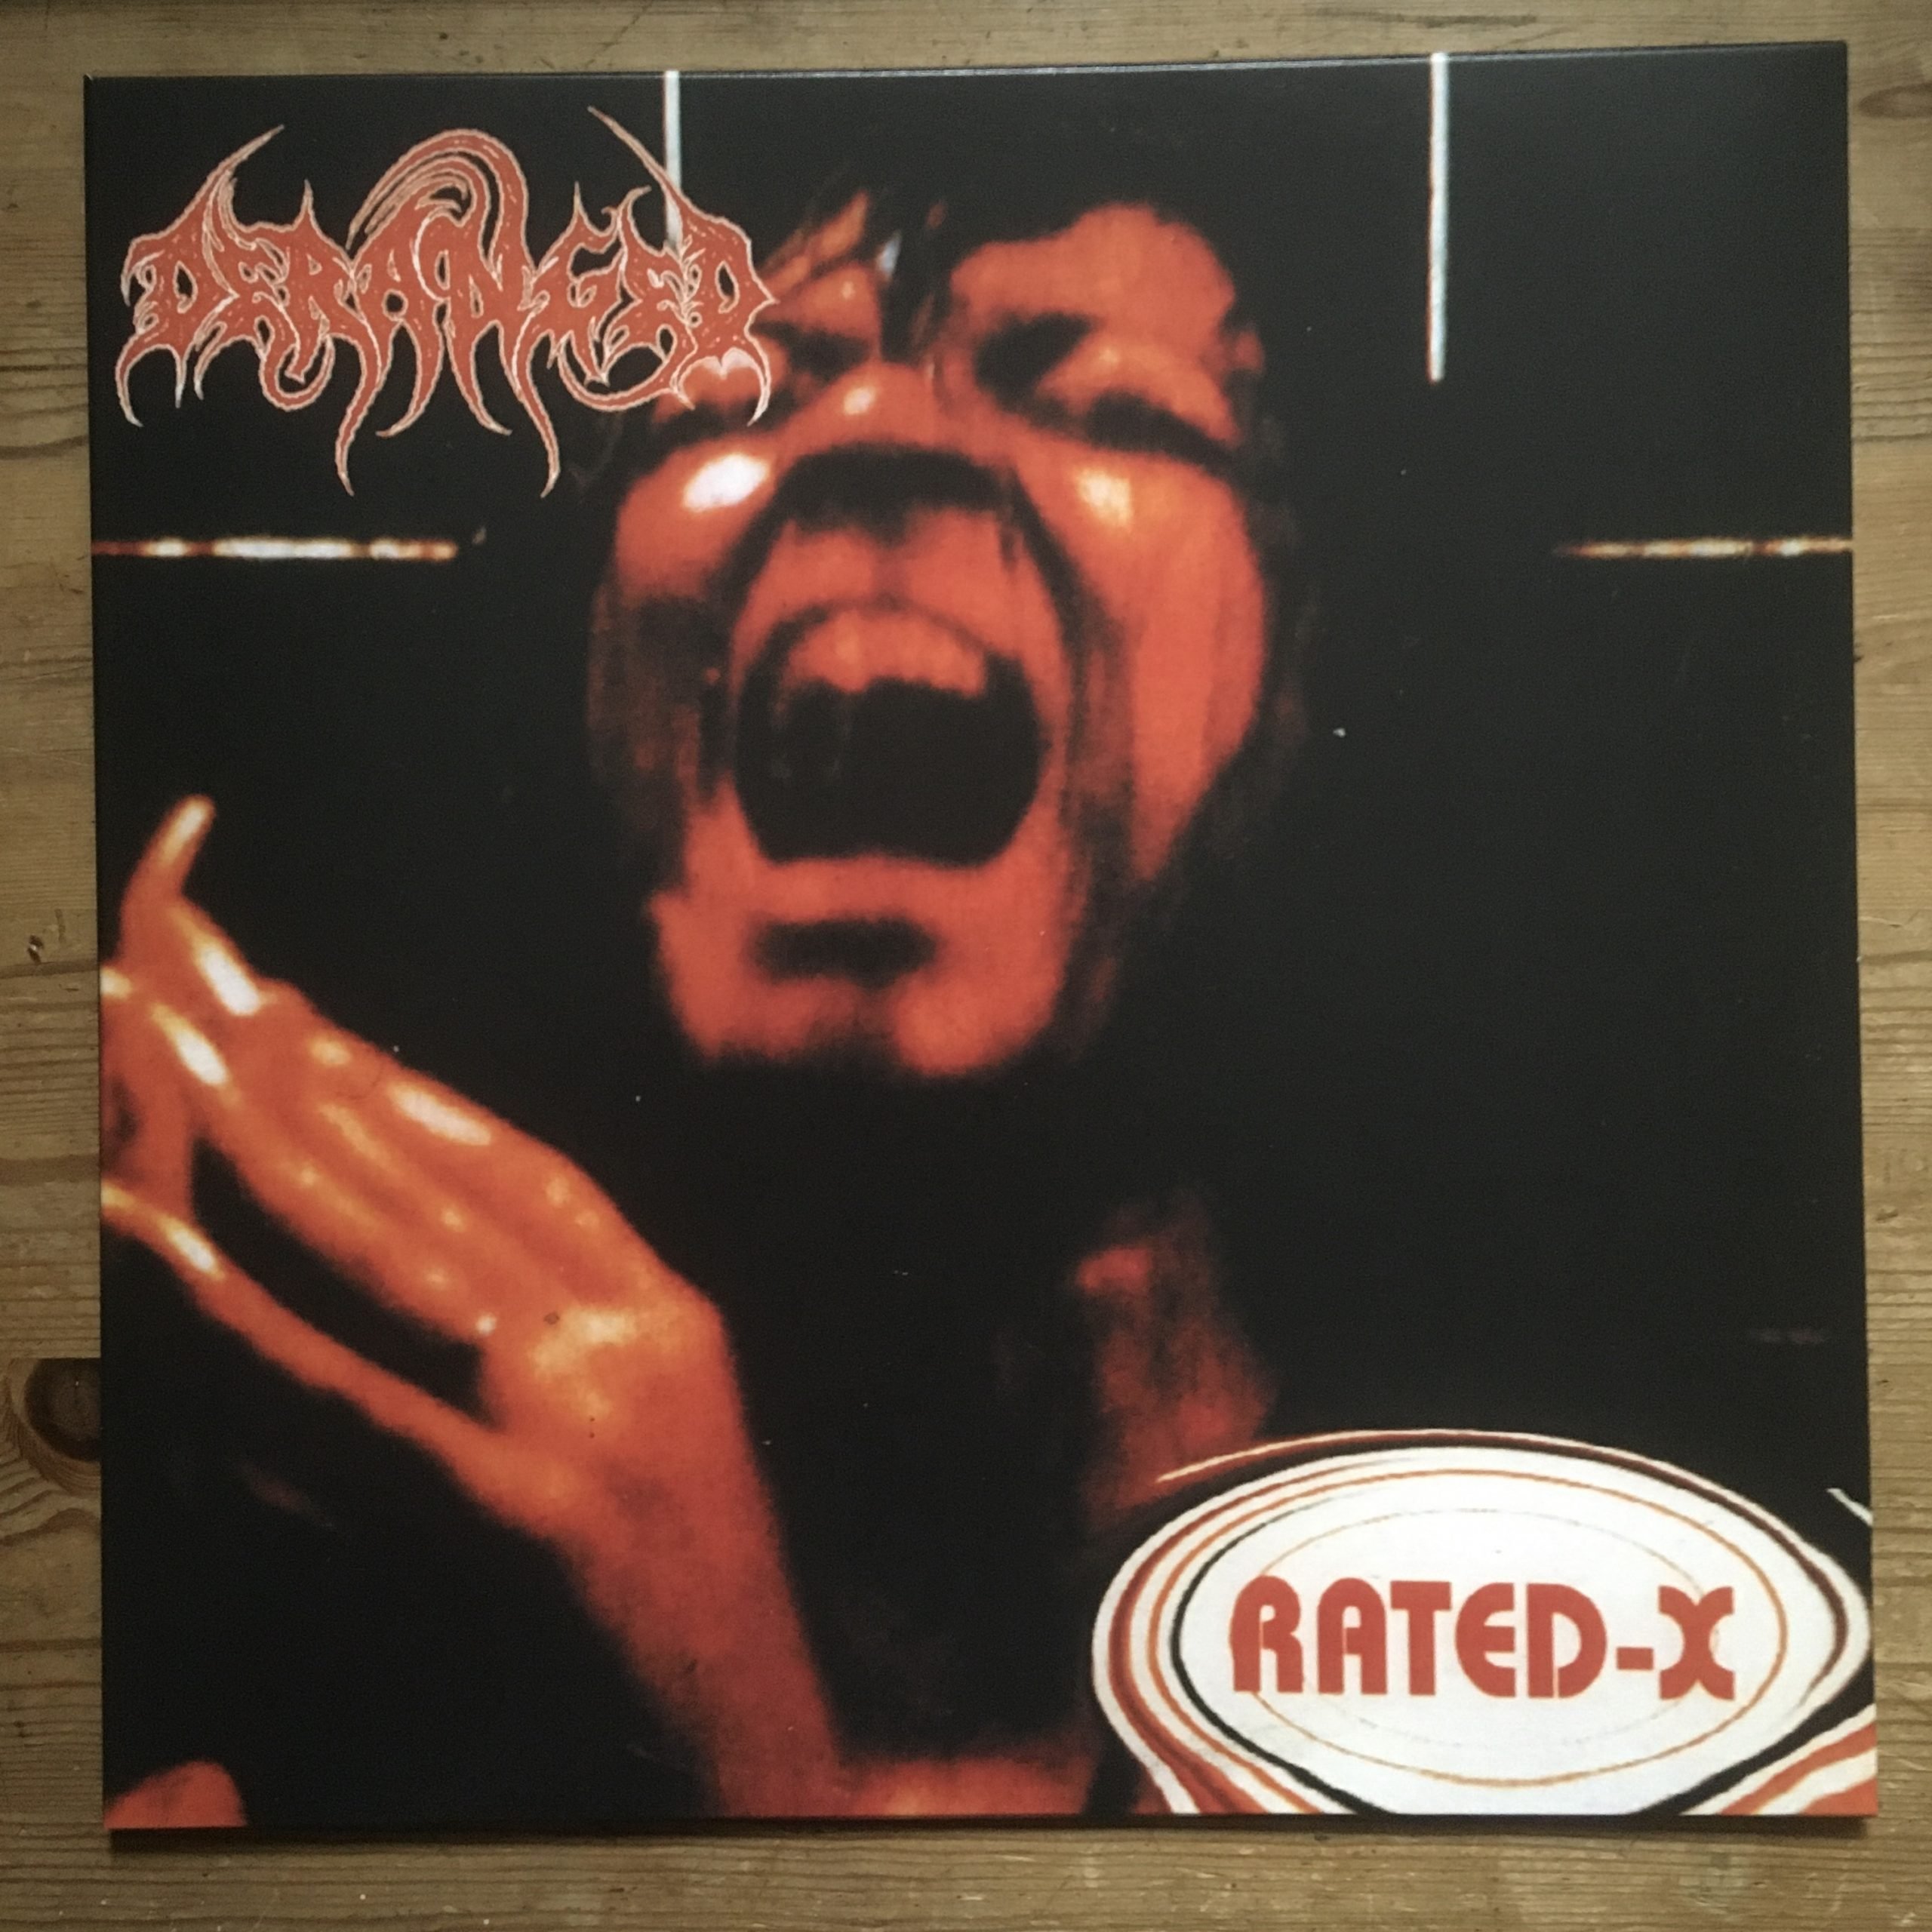 Photo of the Deranged - "Rated X" LP (Black vinyl)